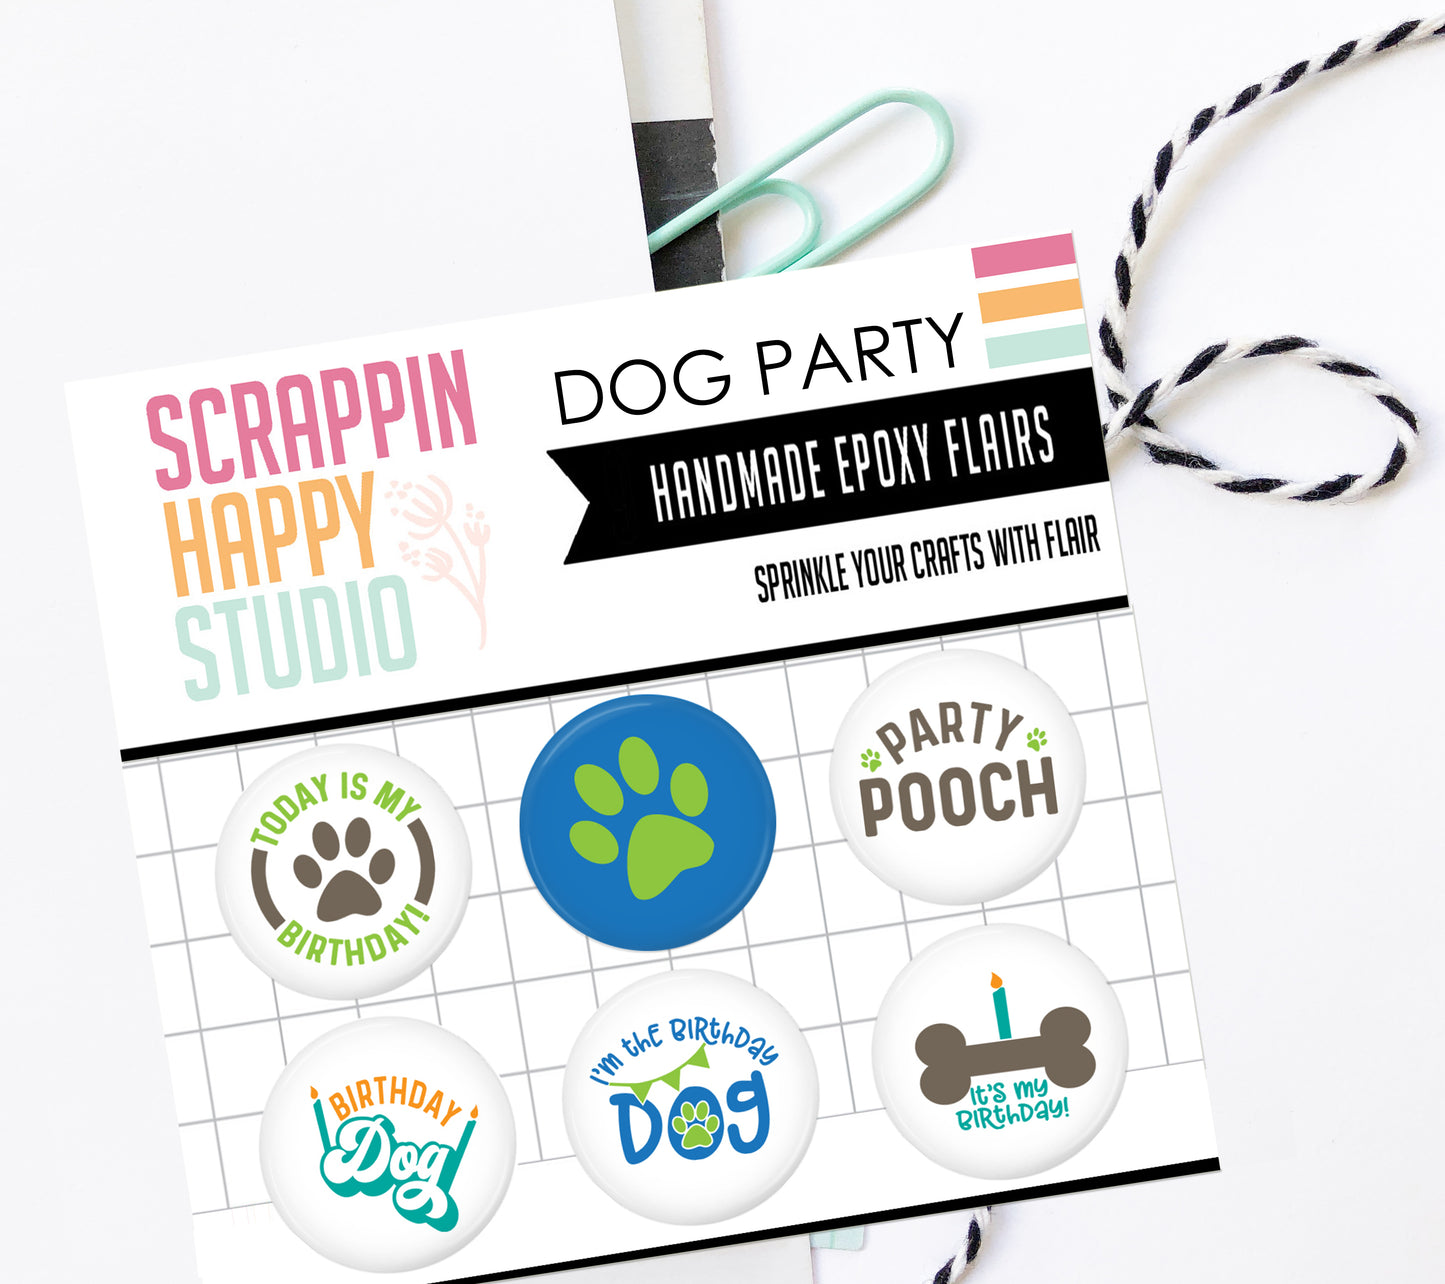 Dog Party Epoxy Flair